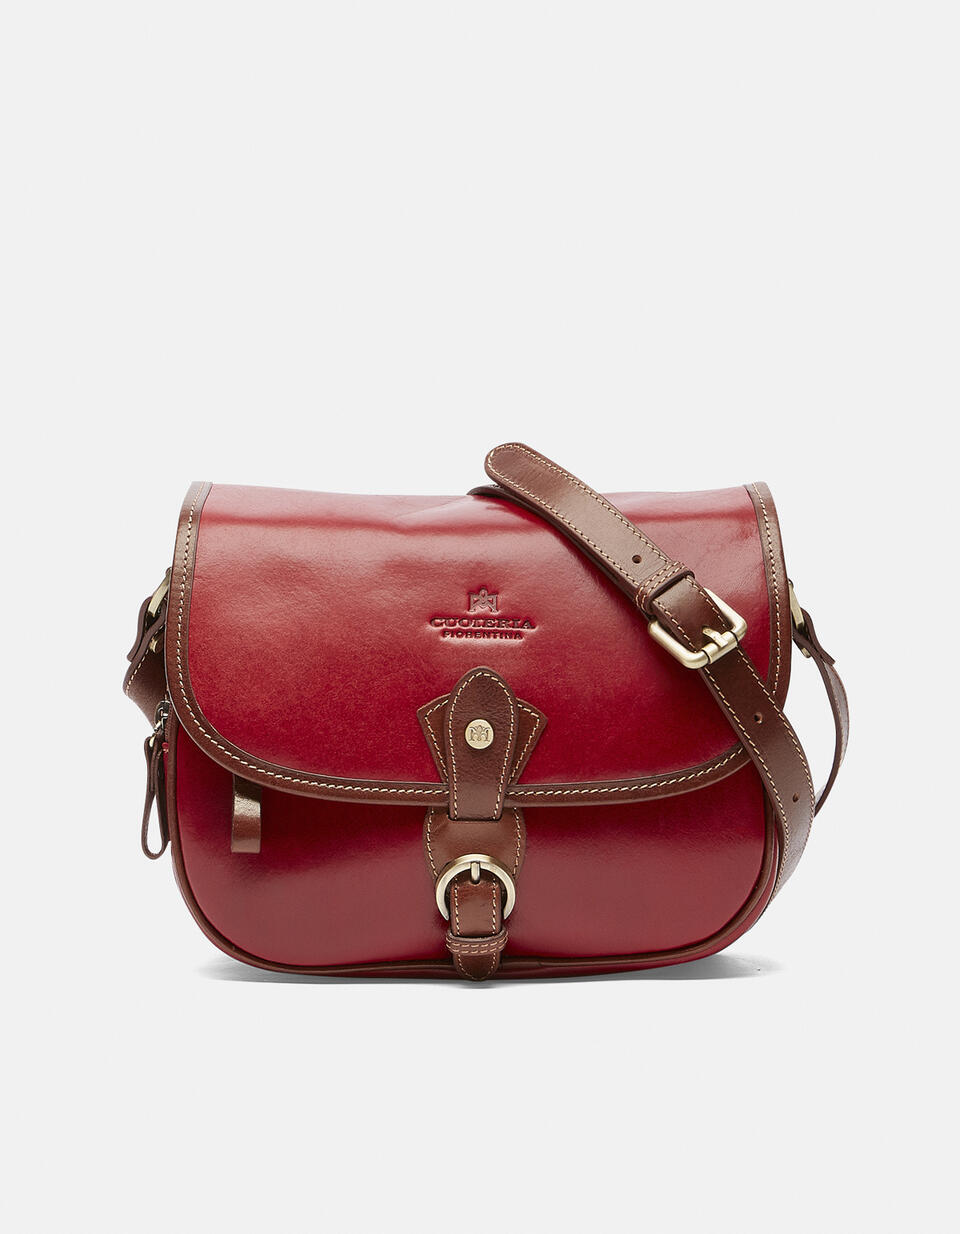 Leather Messenger bag - Messenger Bags - WOMEN'S BAGS | bags ROSSOBICOLORE - Messenger Bags - WOMEN'S BAGS | bagsCuoieria Fiorentina